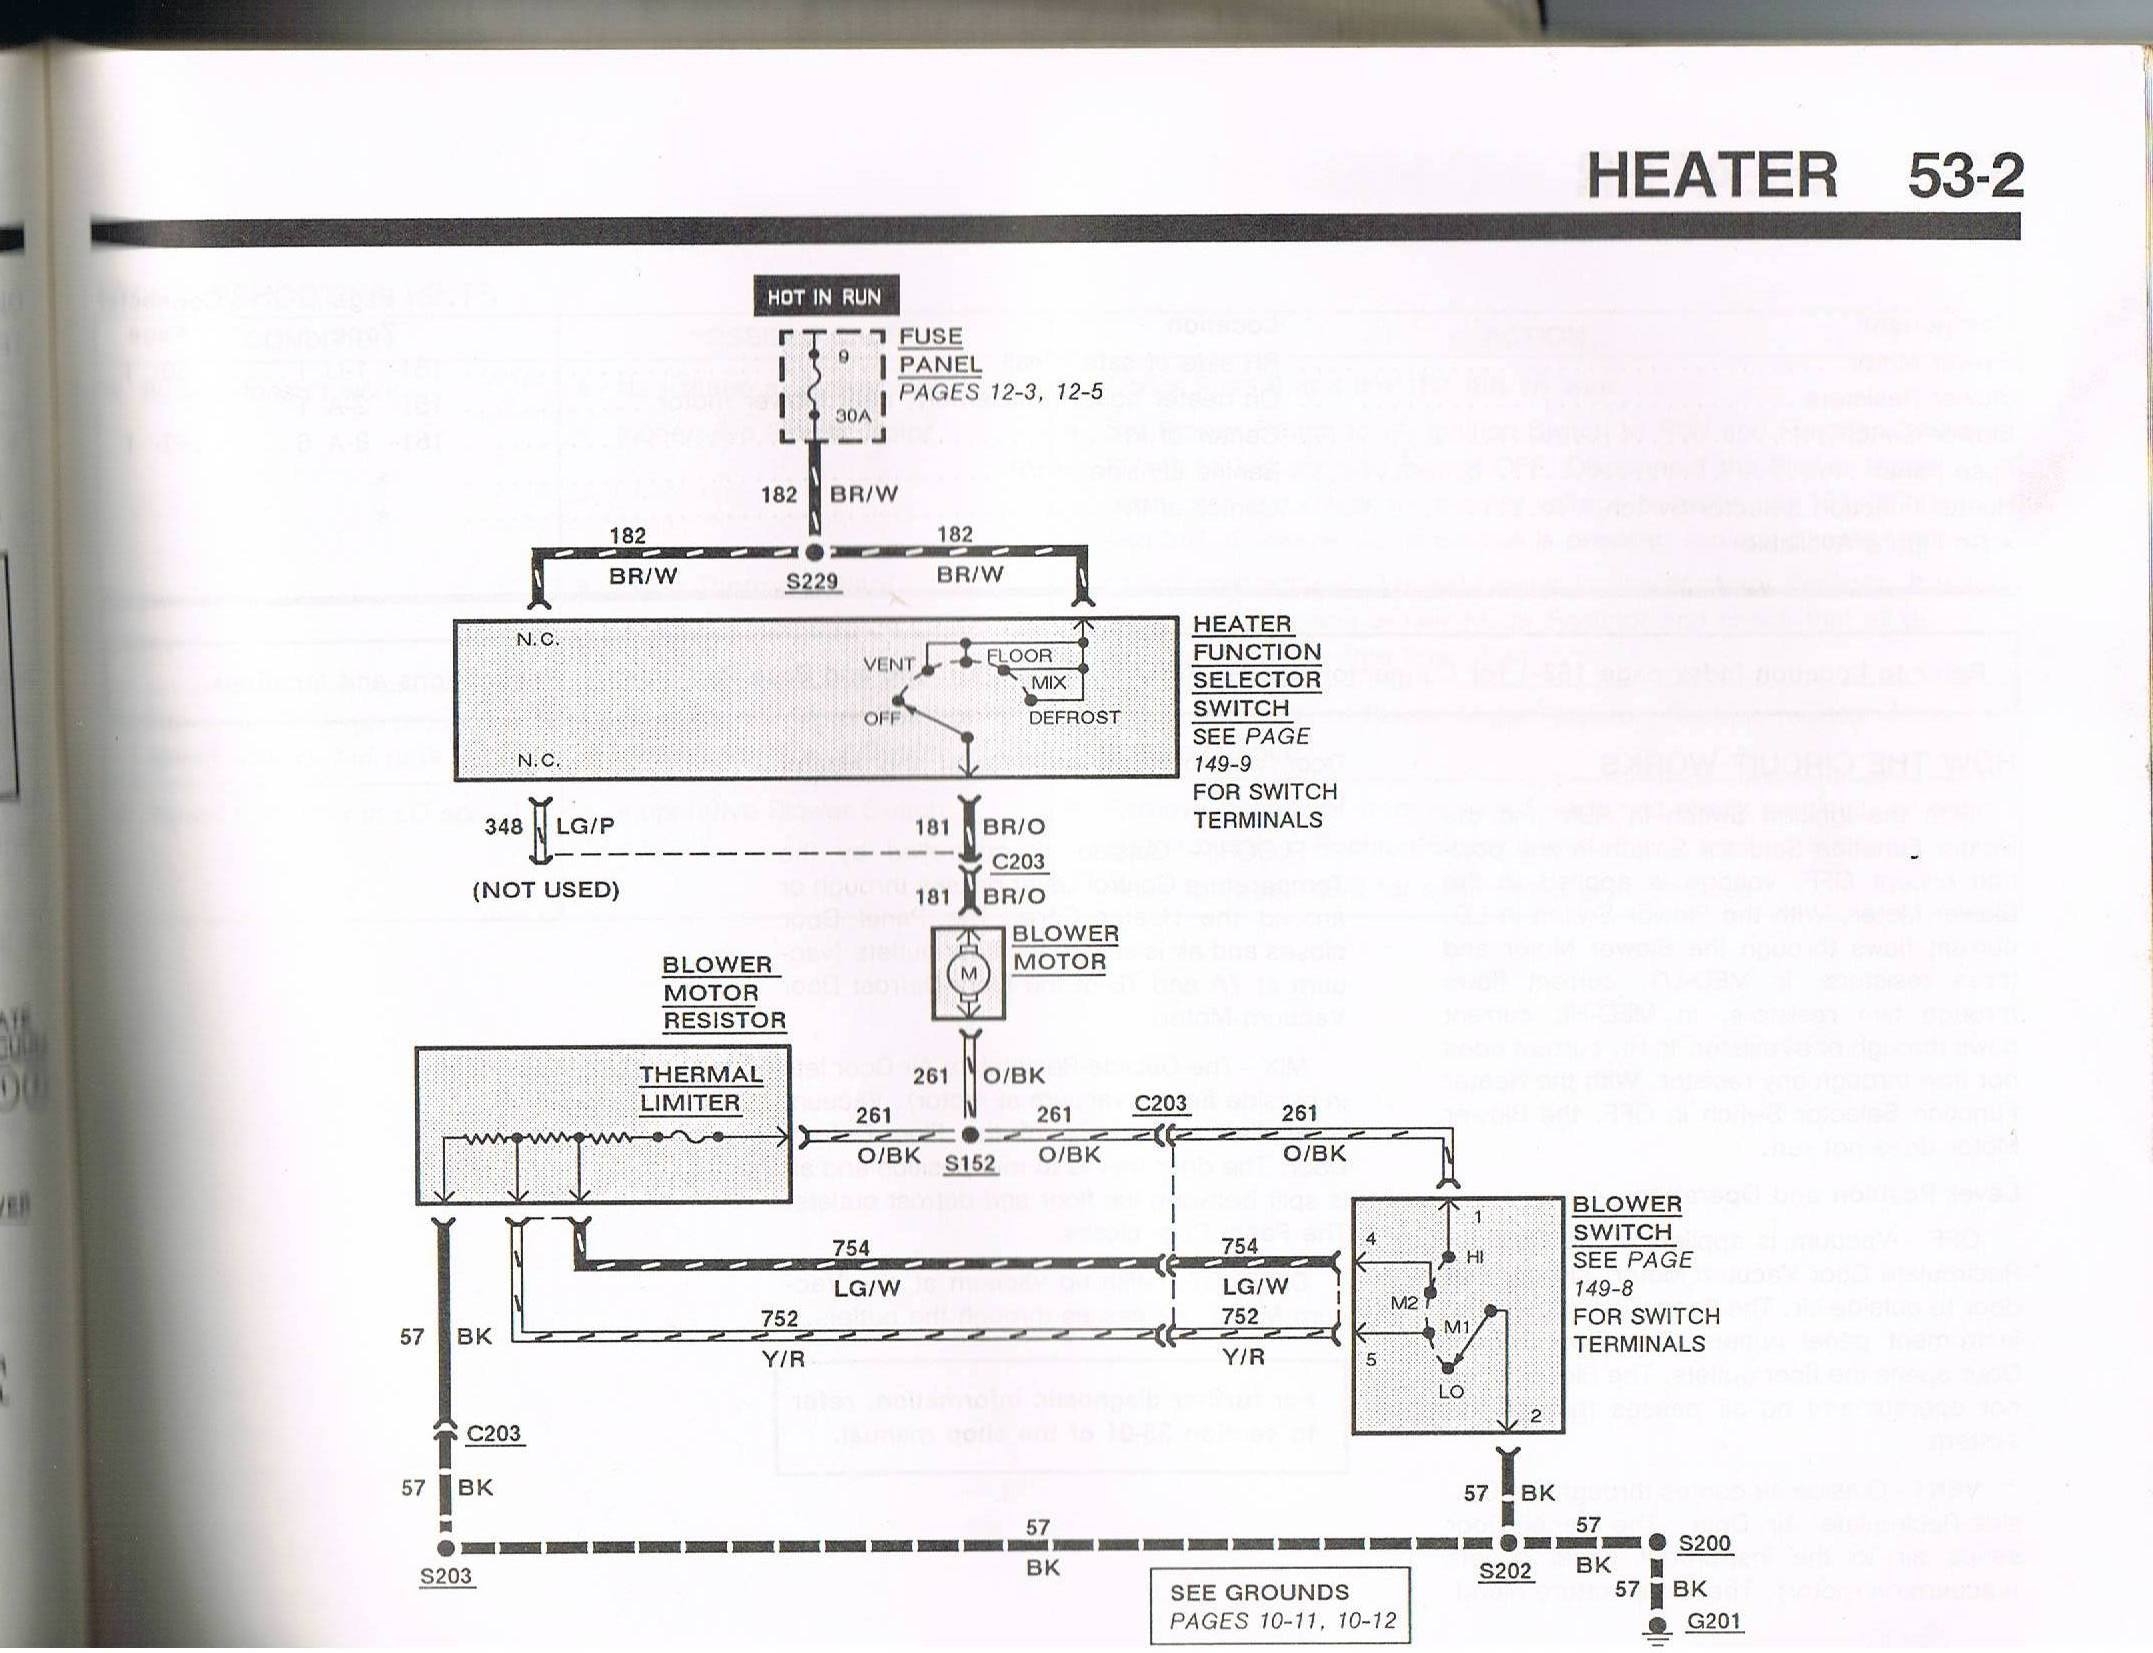 Blower Motor Resistor Wiring Diagram from broncozone.com